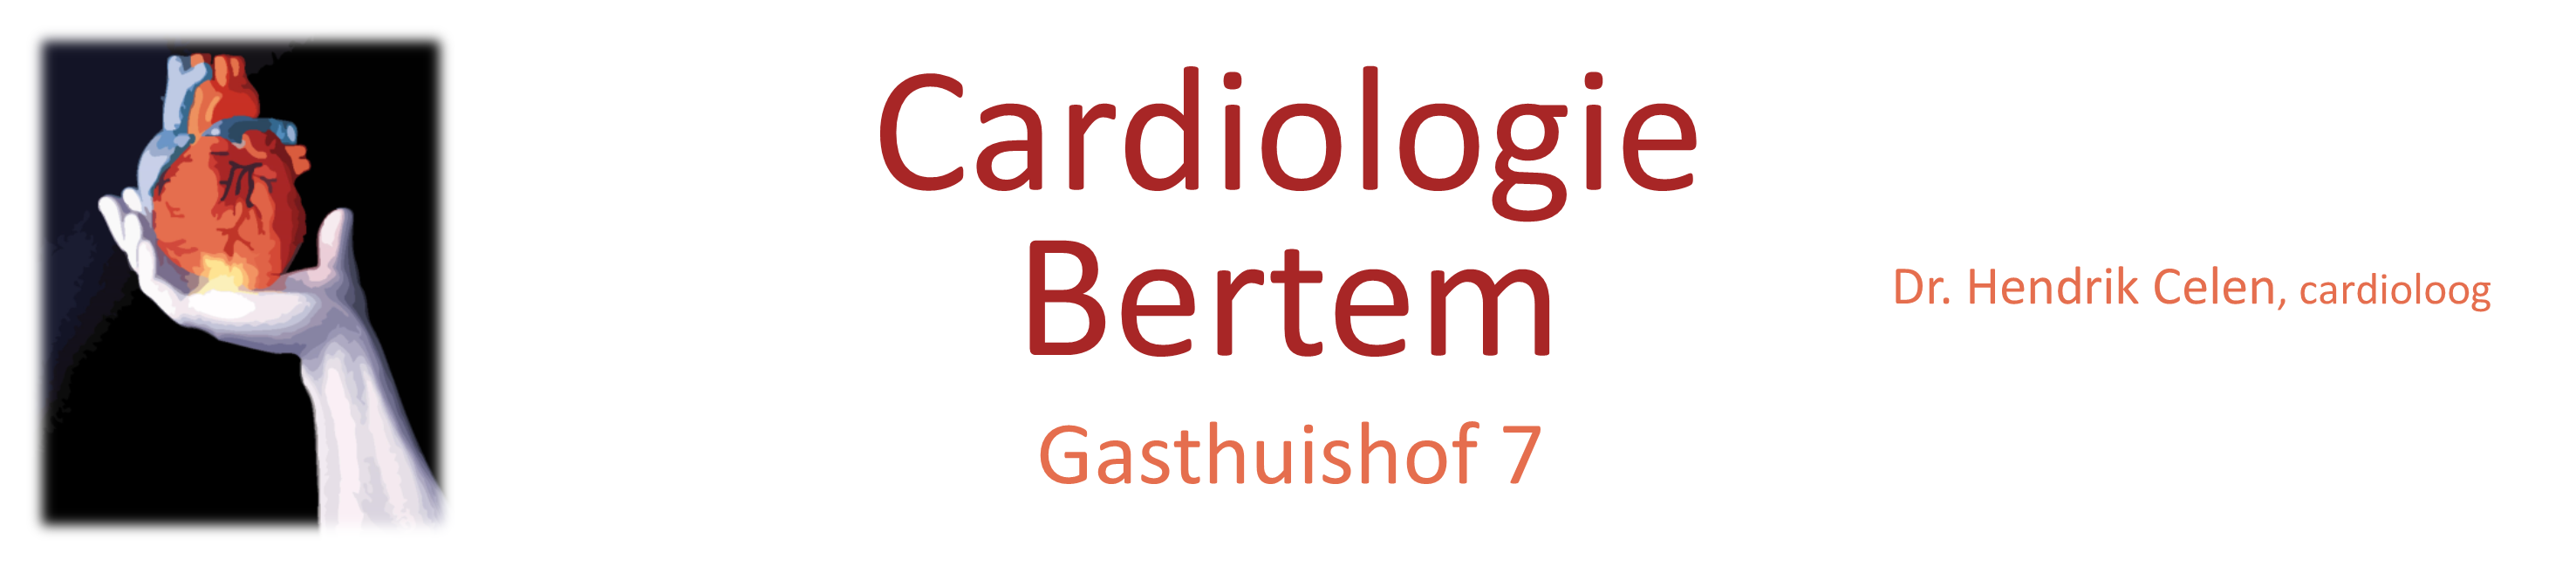 Cardiologie Bertem